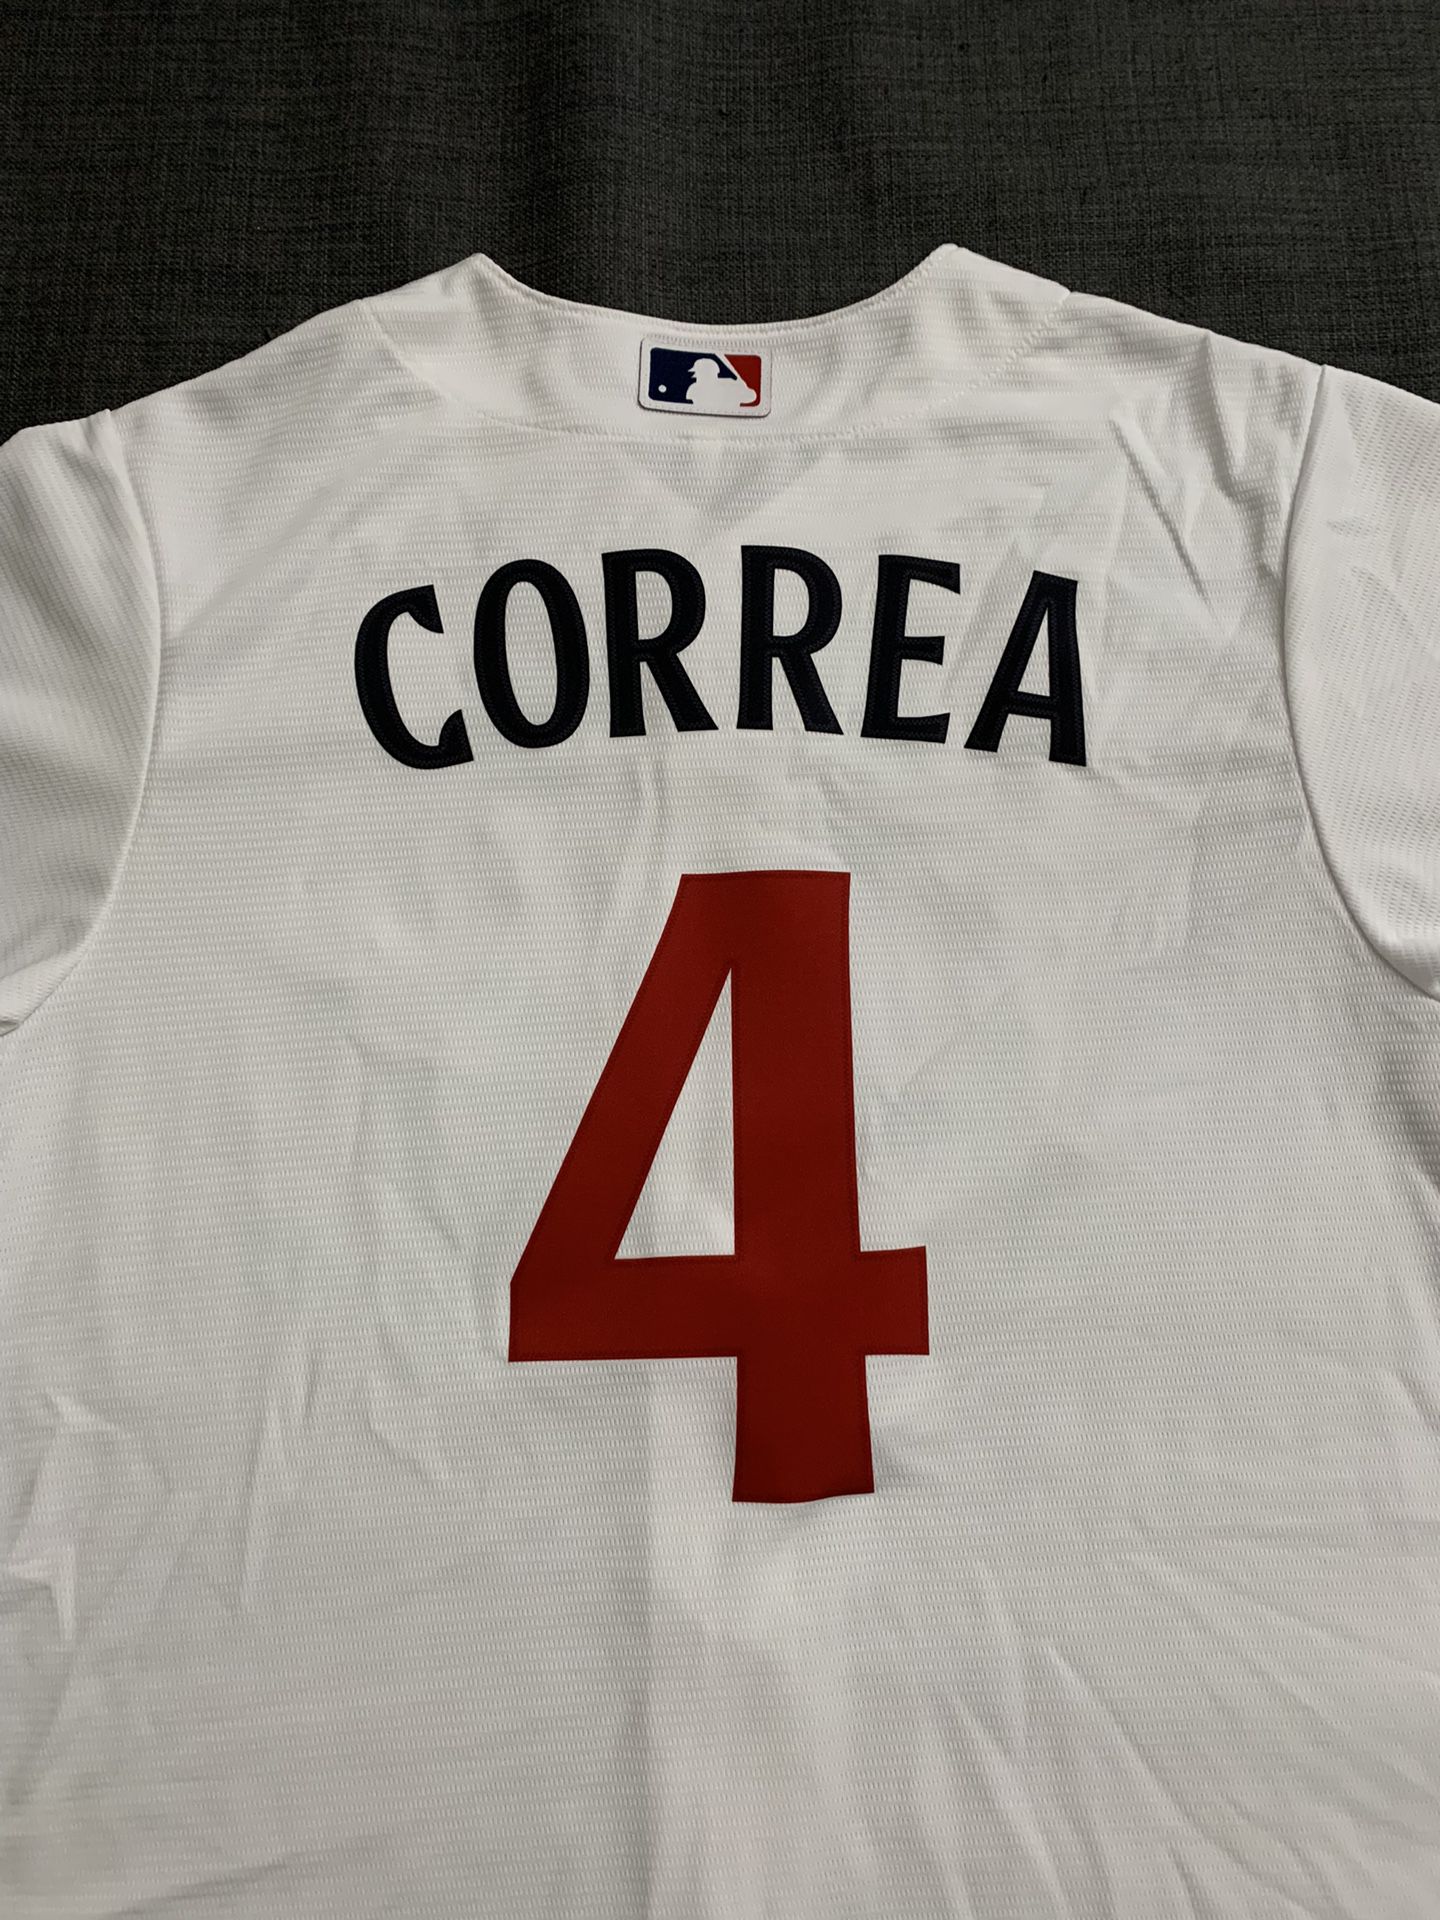 Official Carlos Correa Jersey, Carlos Correa Shirts, Baseball